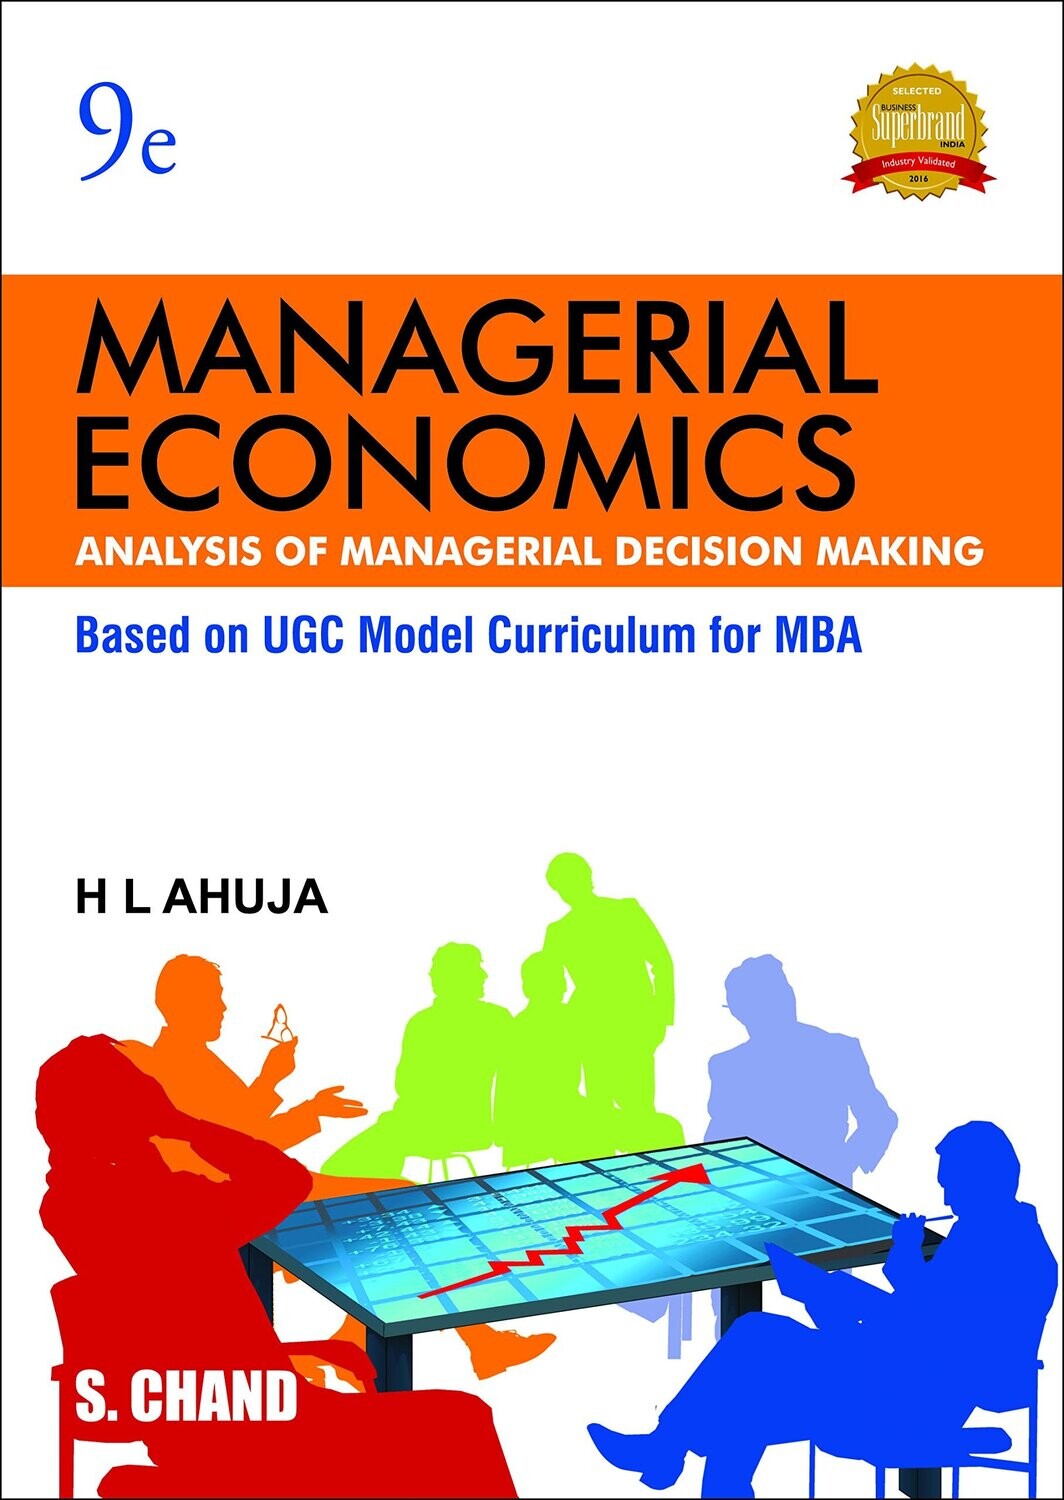 Managerial Economics Paperback H. L. Ahuja | Pustakkosh.com